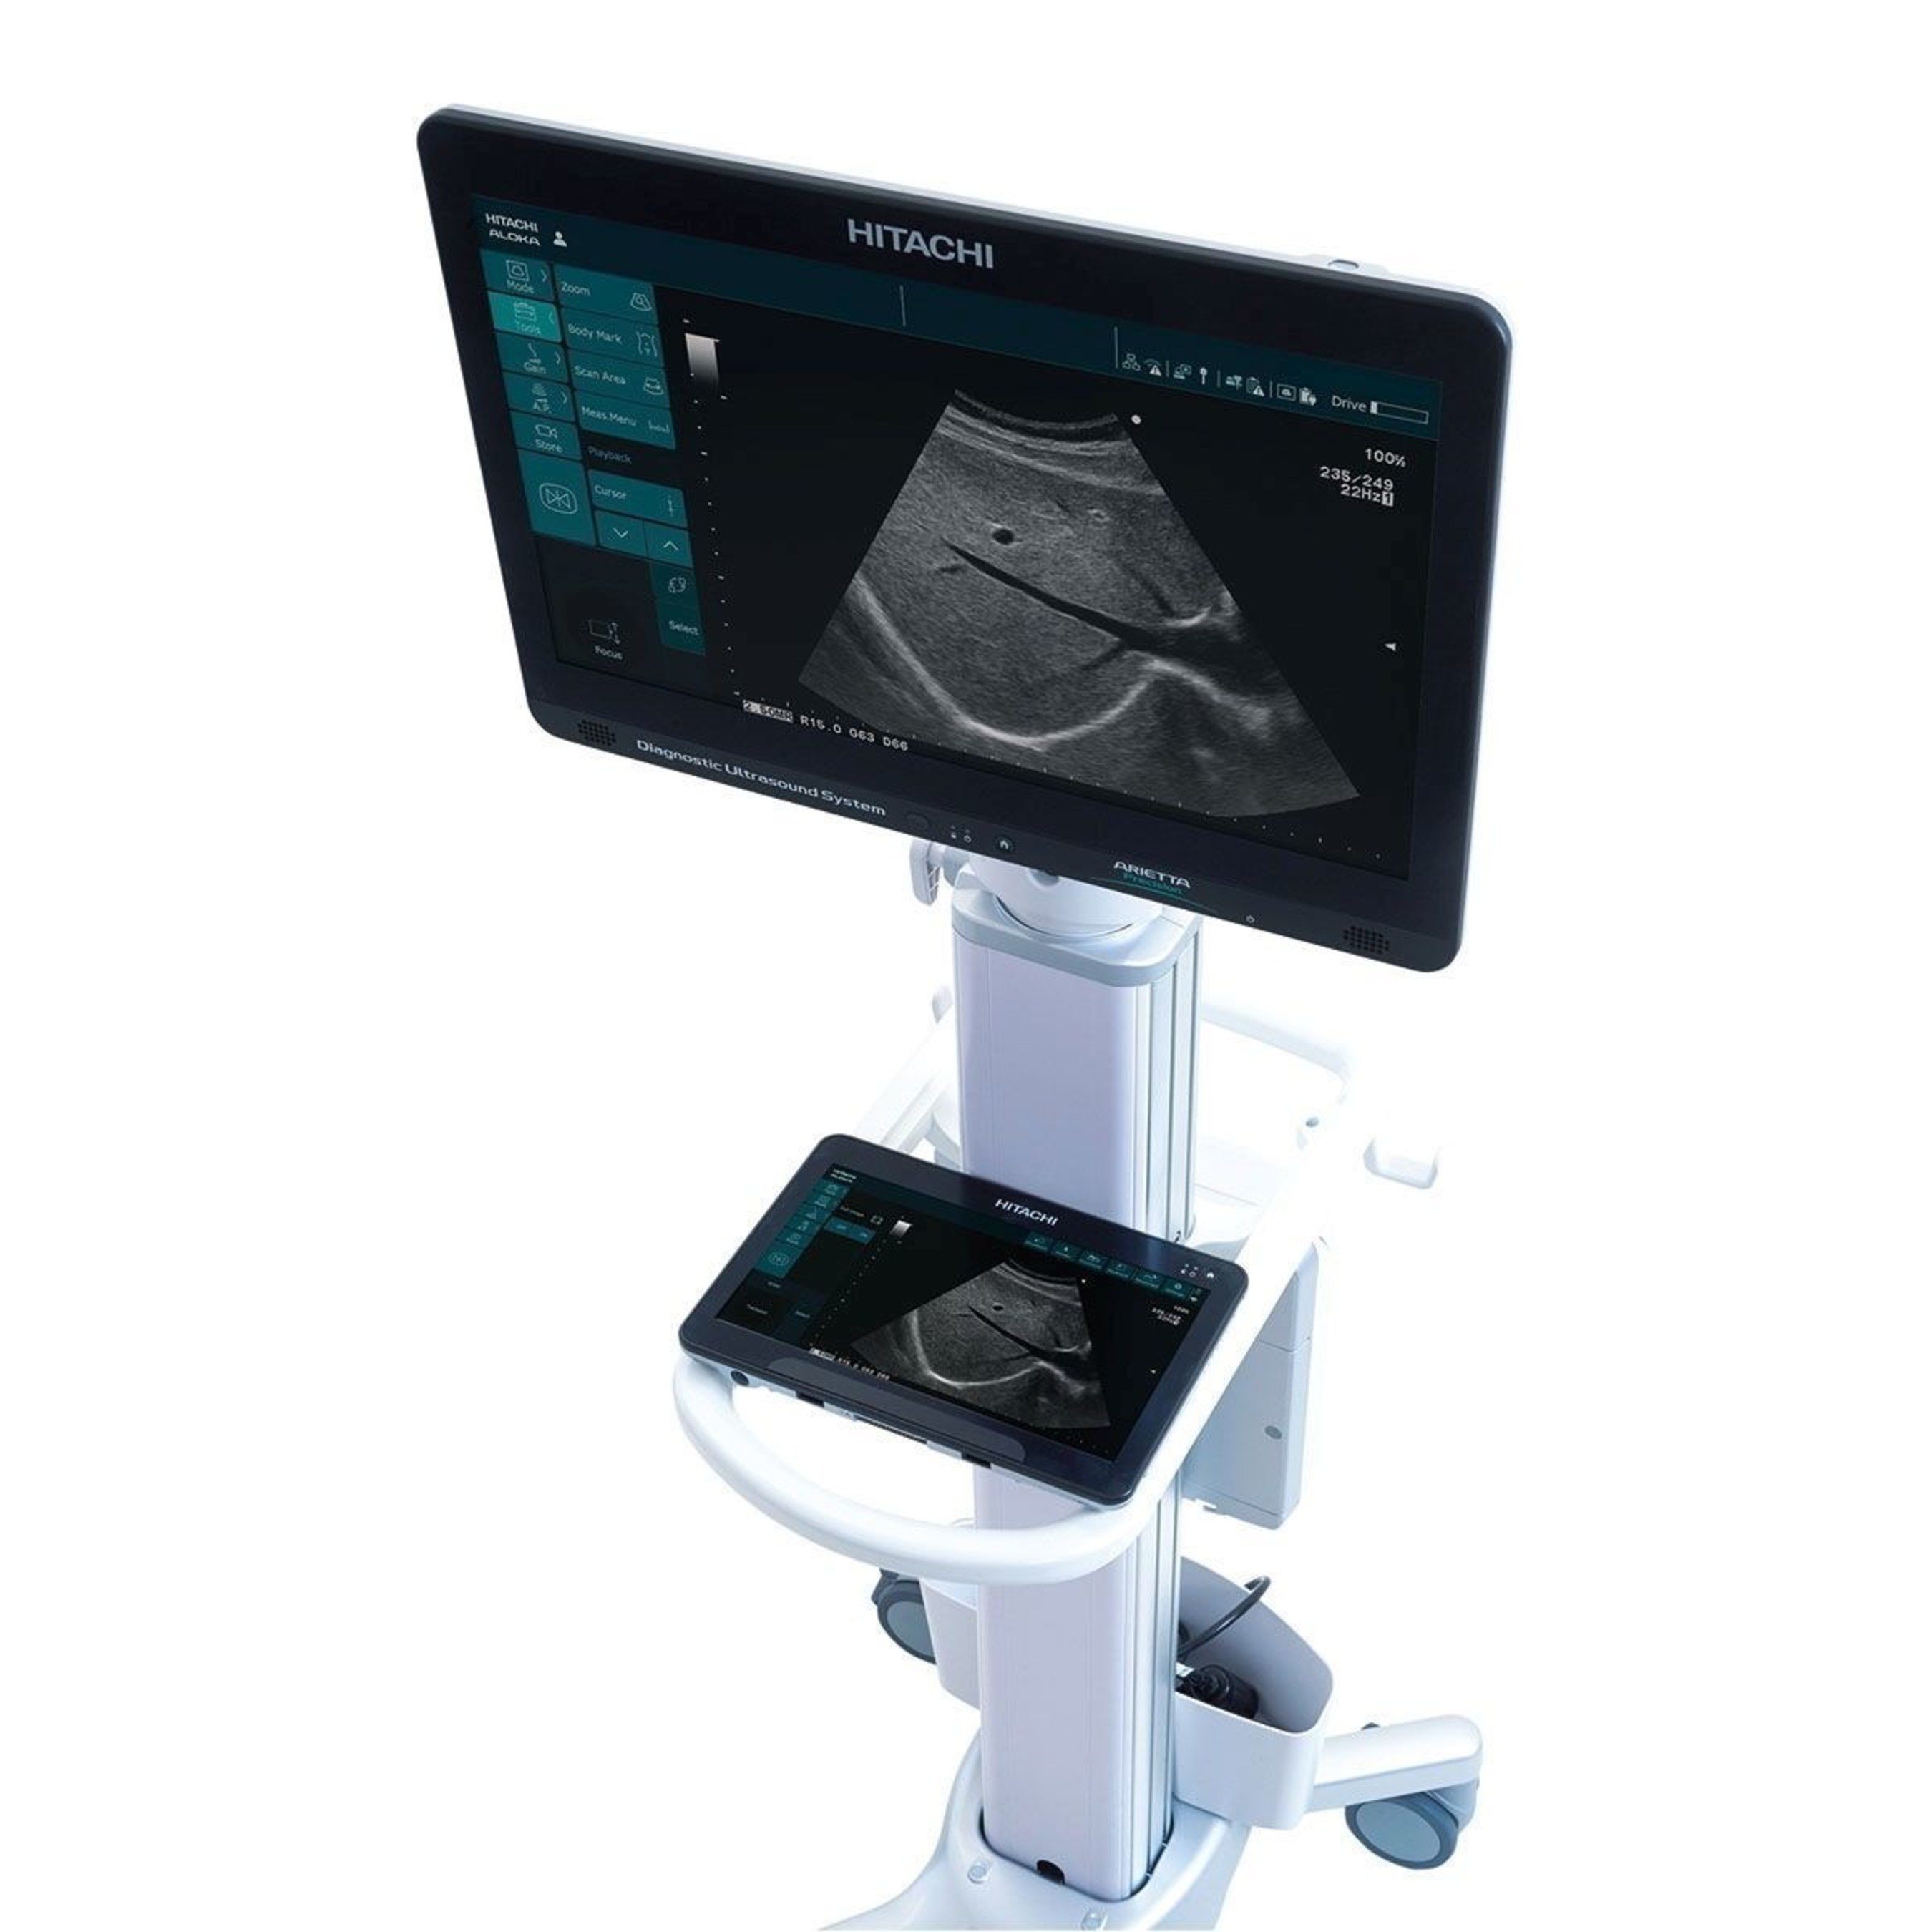 ARIETTA Precision. Hitachi Aloka launches two new, highly flexible Diagnostic Ultrasound Systems, ARIETTA Precision and ARIETTA Prologue. (PRNewsFoto/Hitachi Medical Systems Europe) (PRNewsFoto/Hitachi Medical Systems Europe)